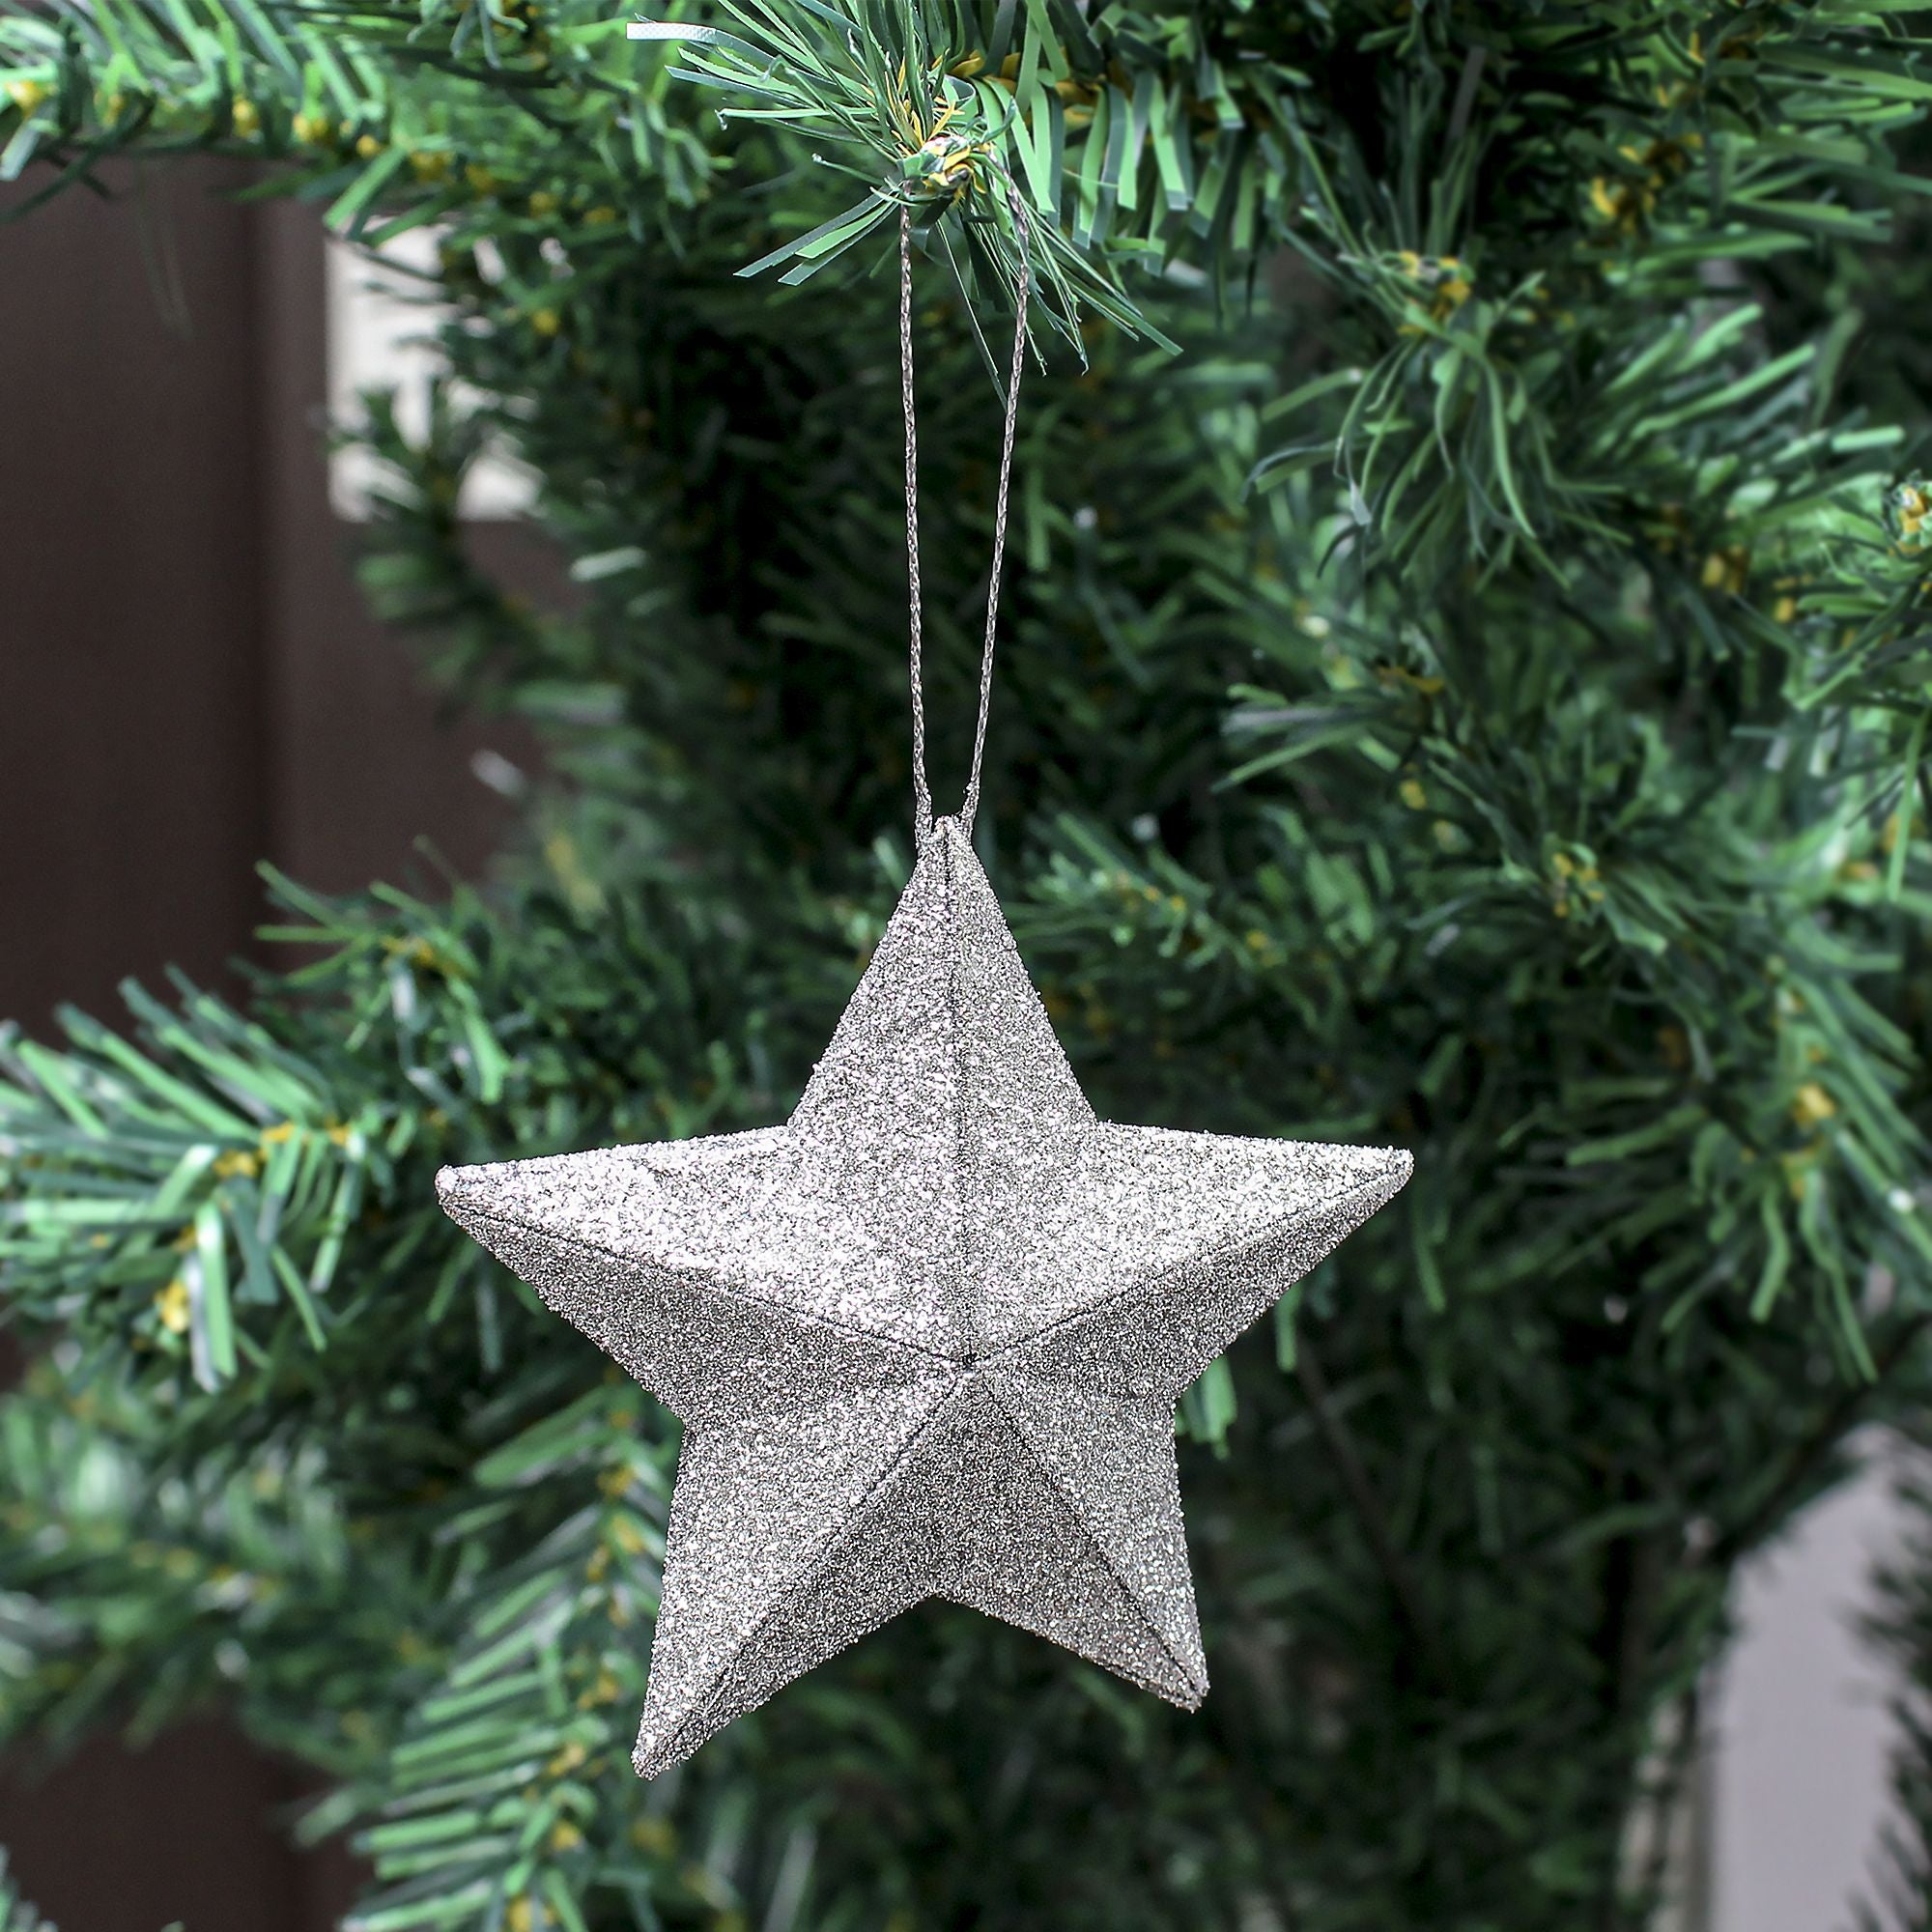 Handmade Christmas Ornaments - 3D Glitter Stars, 2.5inch, Silver, 6pc